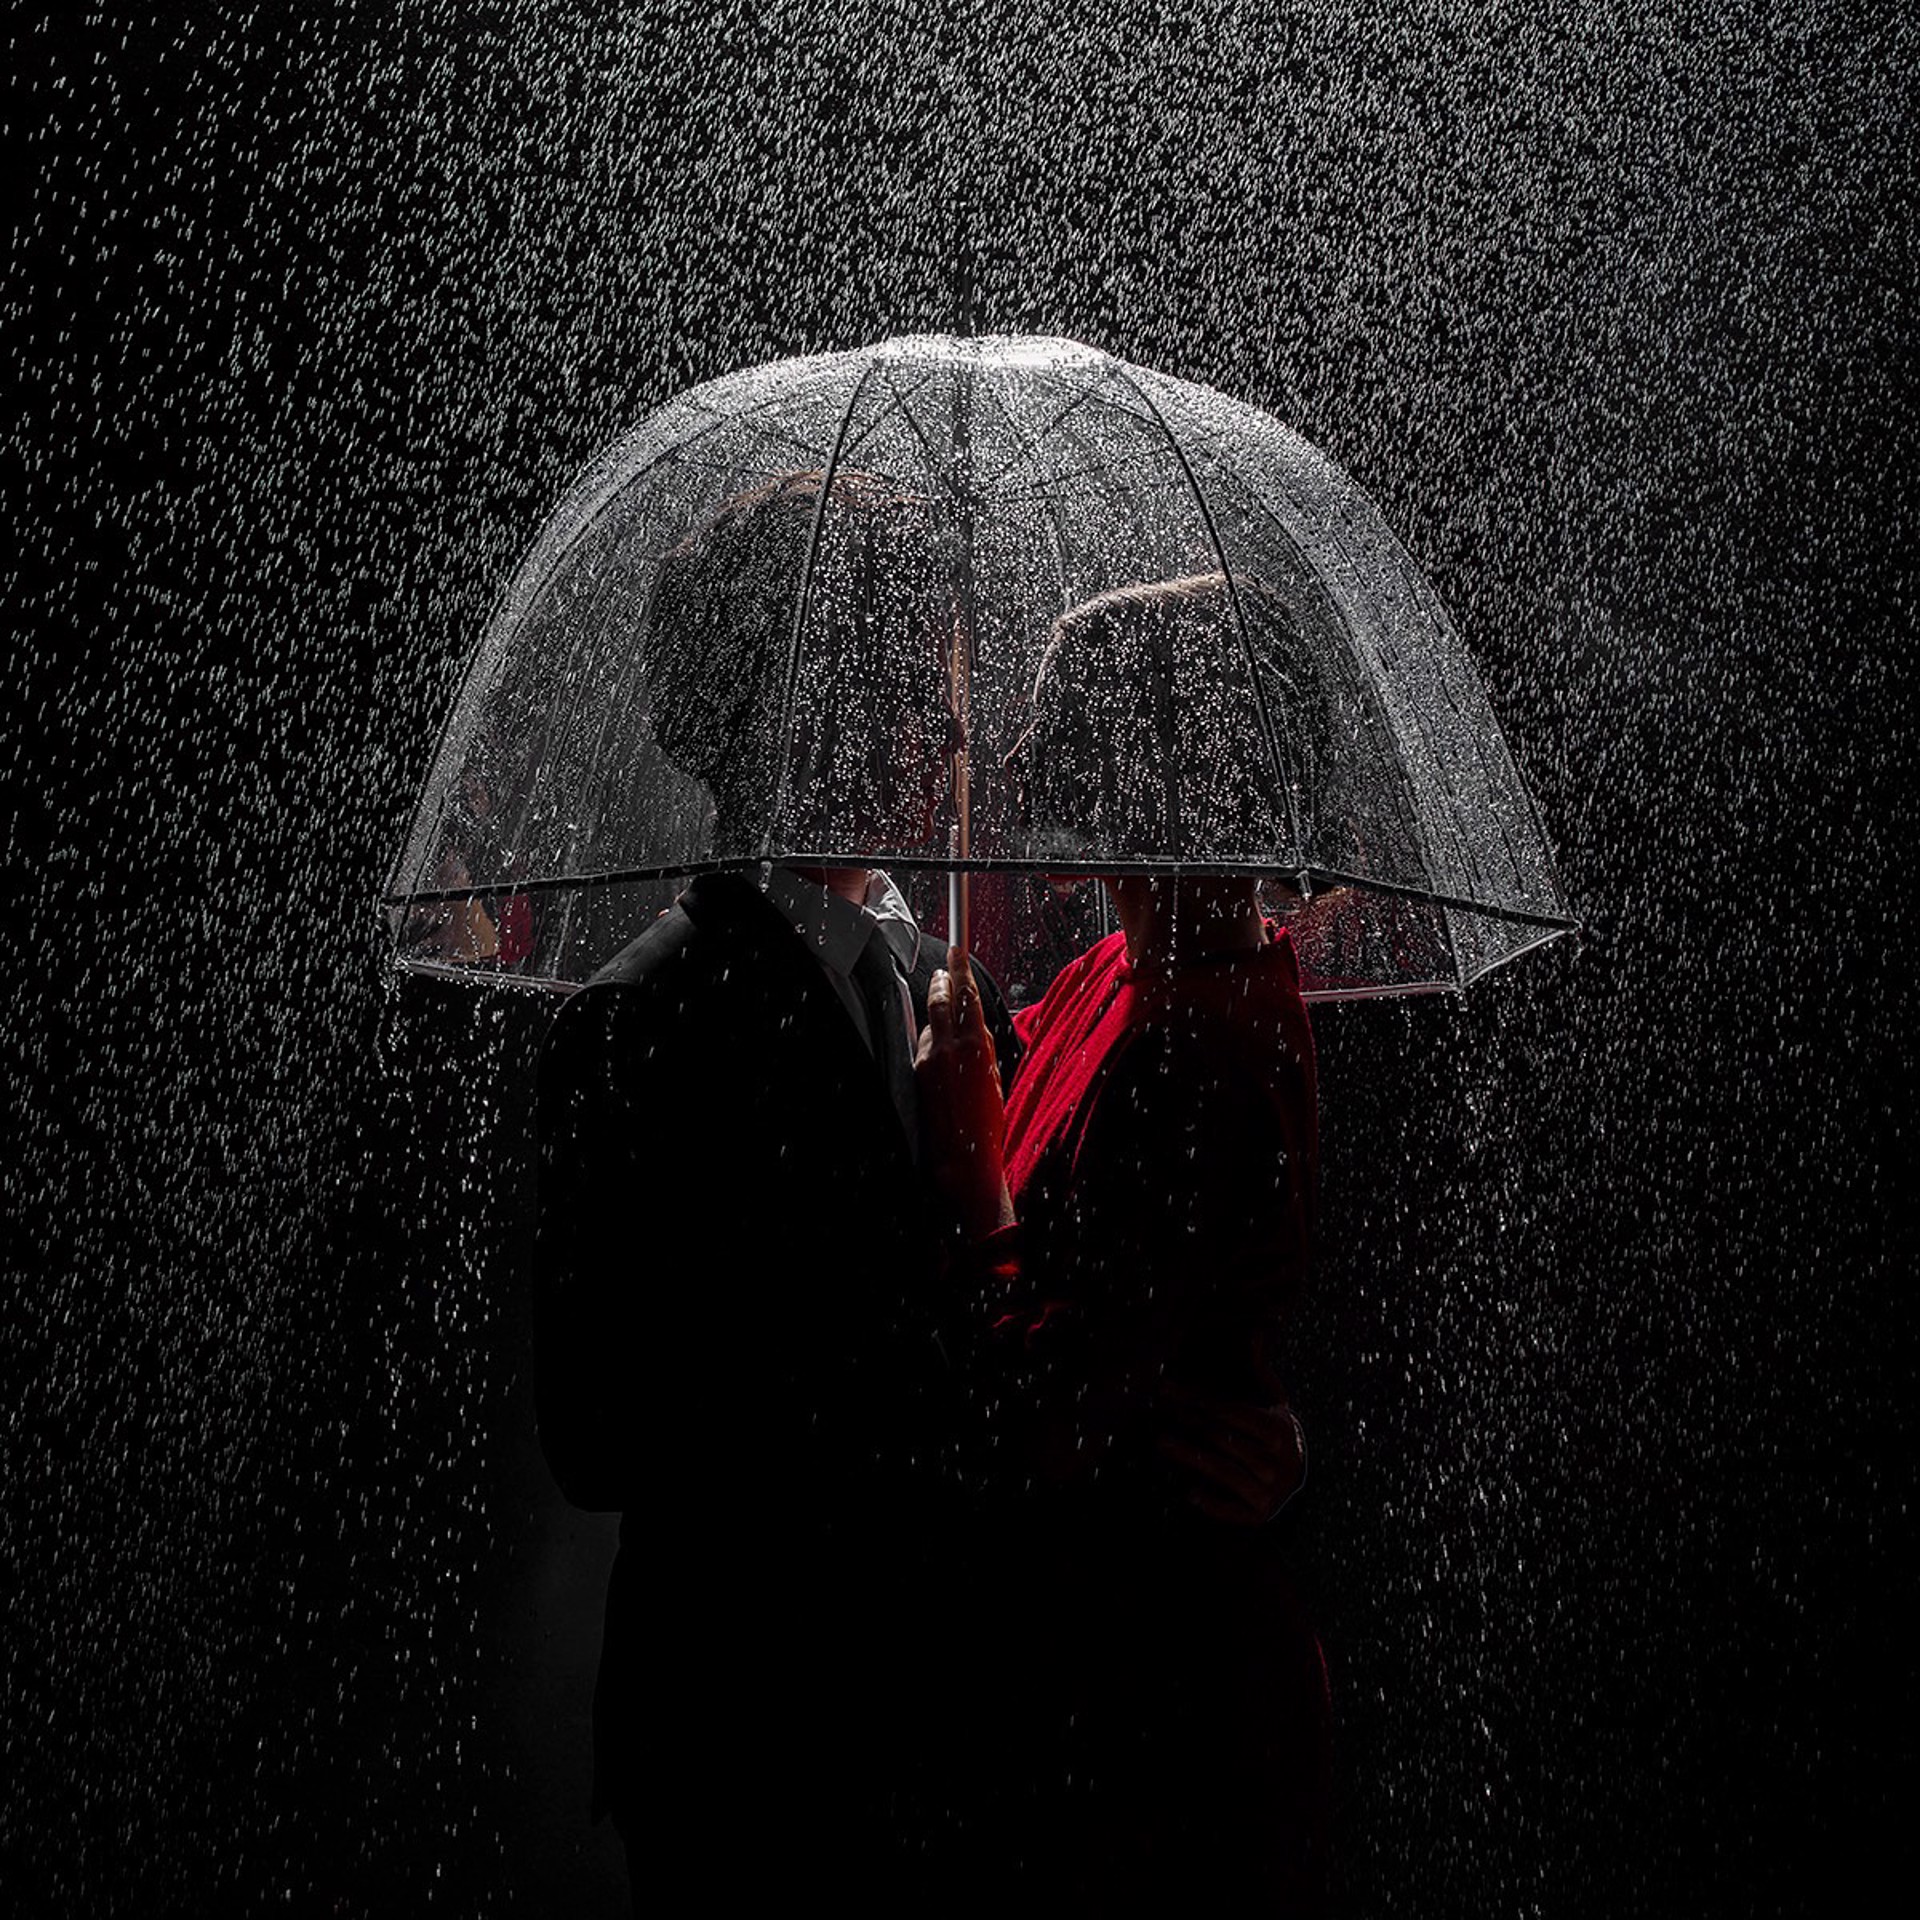 Under the Rain by Tyler Shields